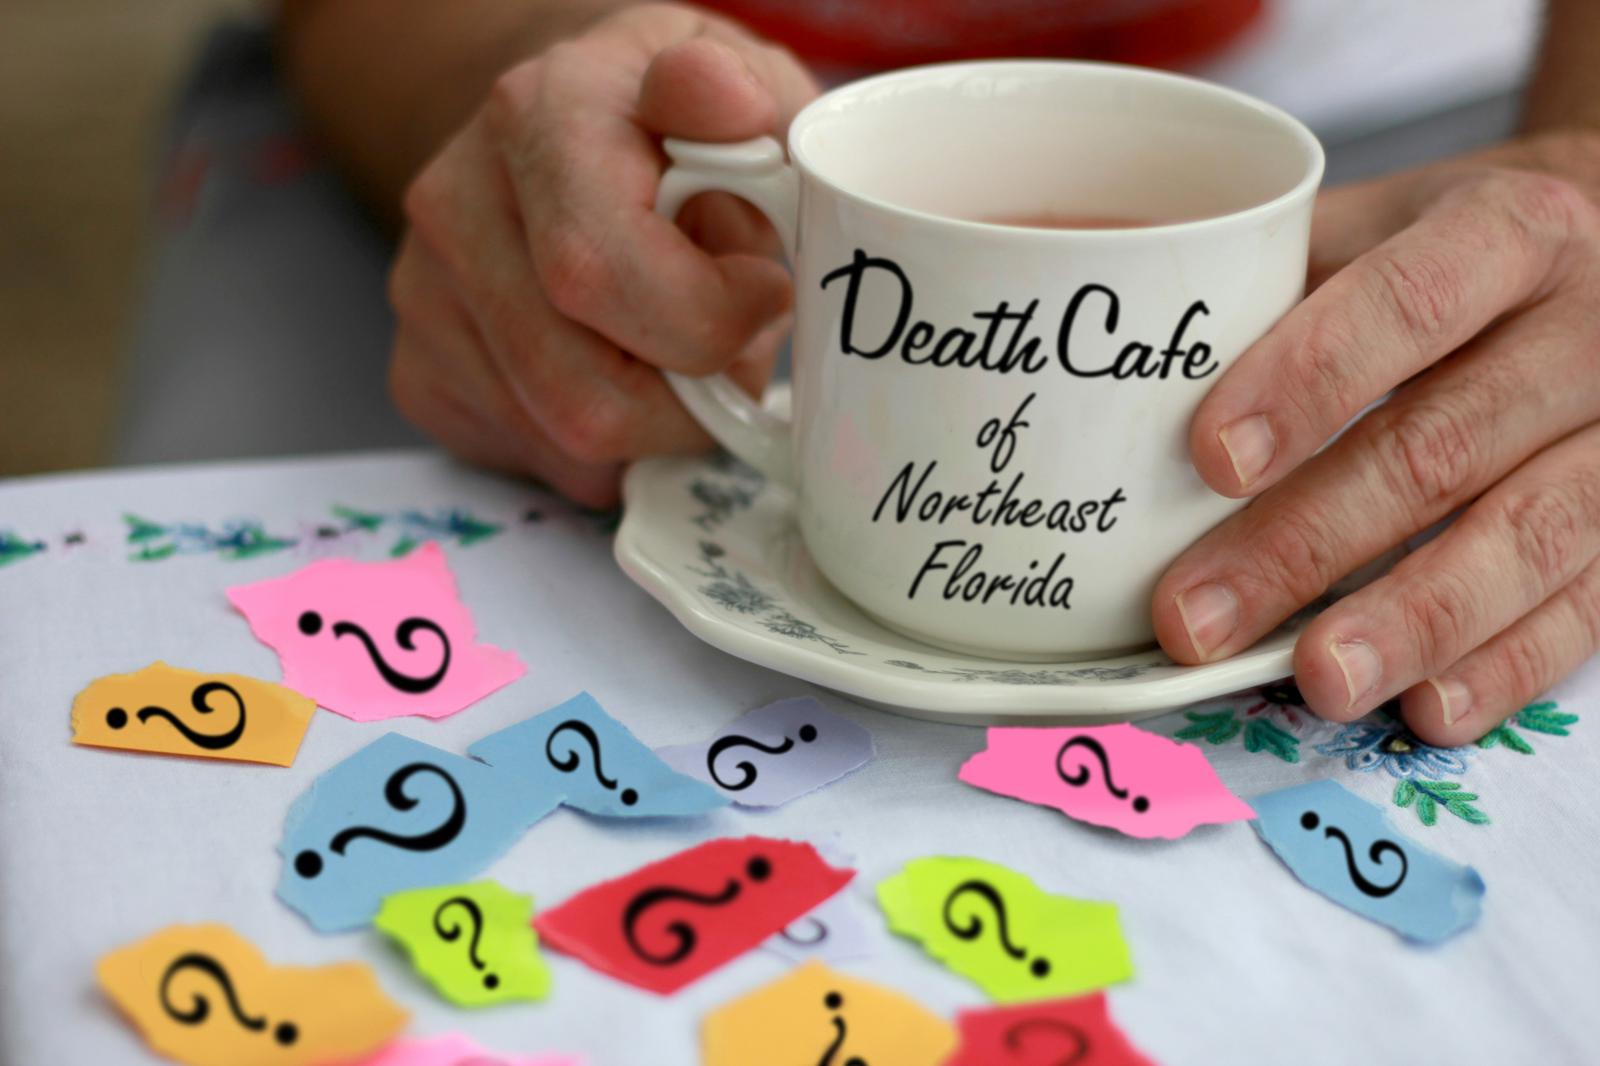 Death Cafe Northeast Florida - VIRTUAL MEETING